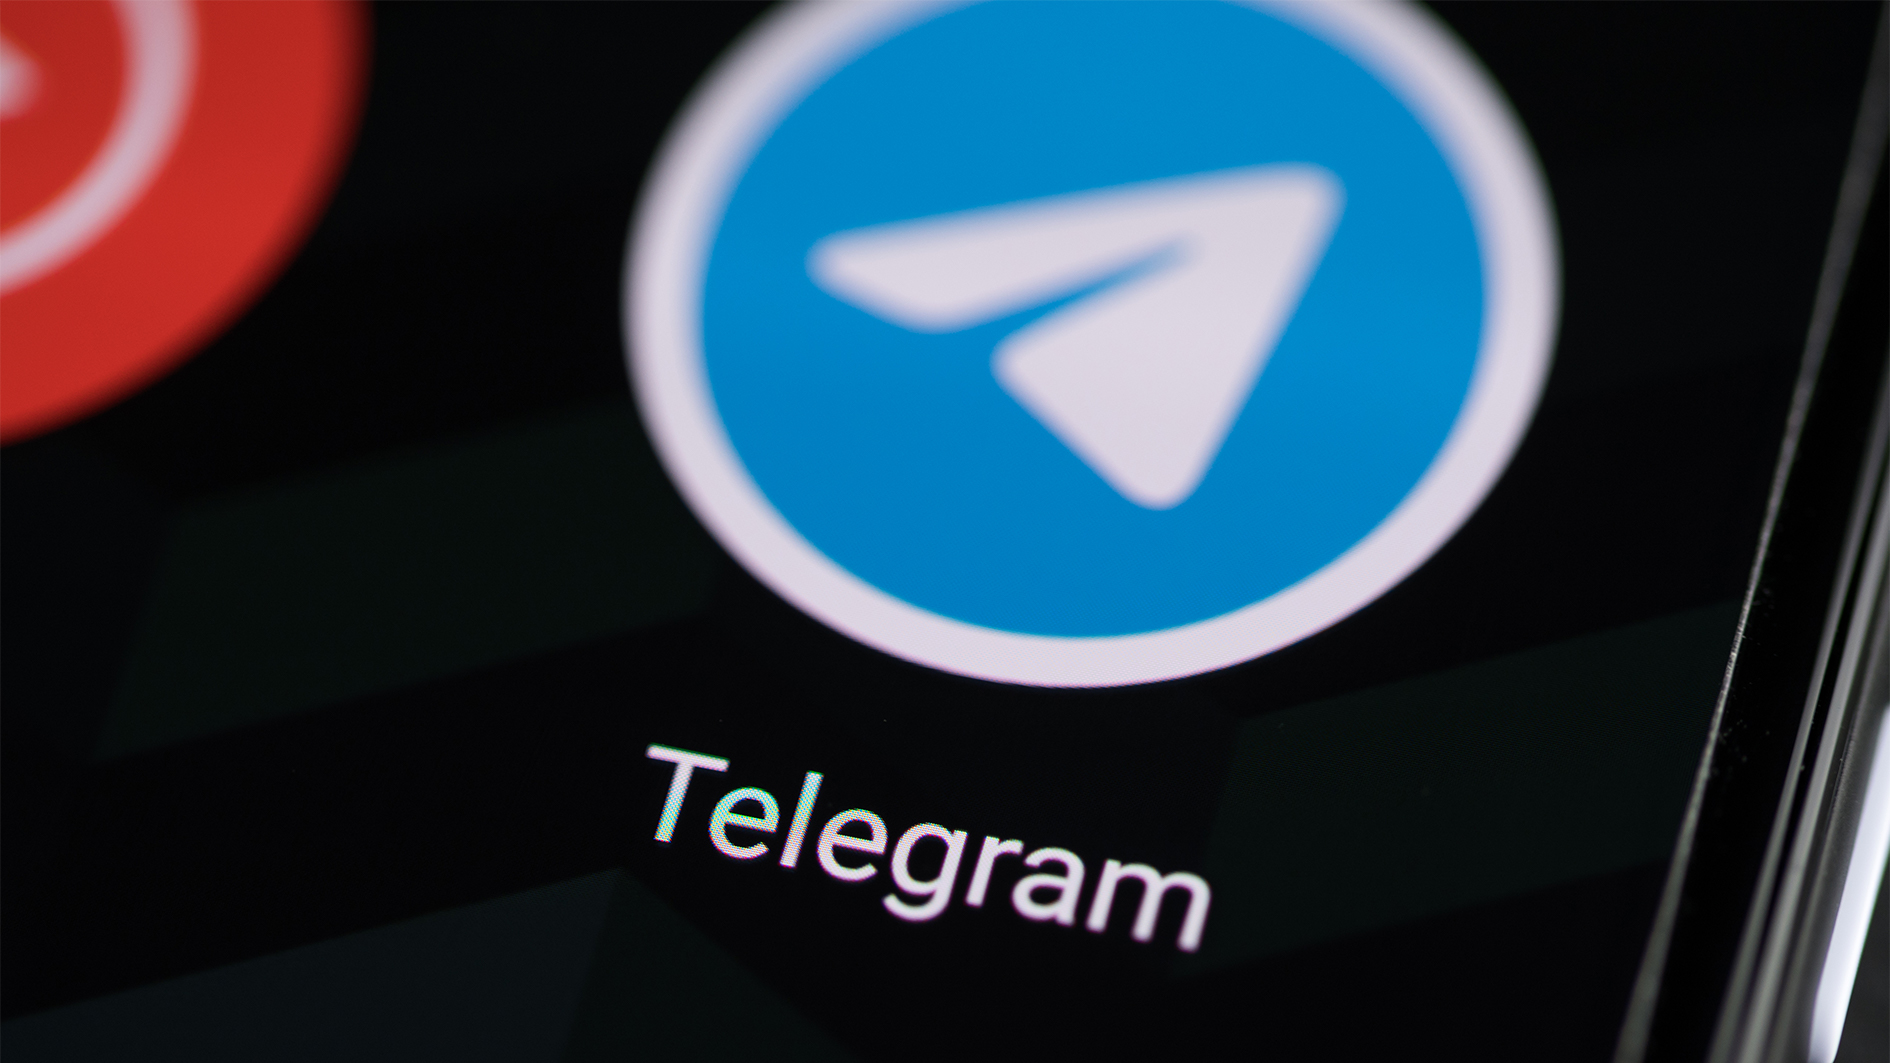 TecMundo agora tem grupo no WhatsApp e Telegram; participe! - TecMundo